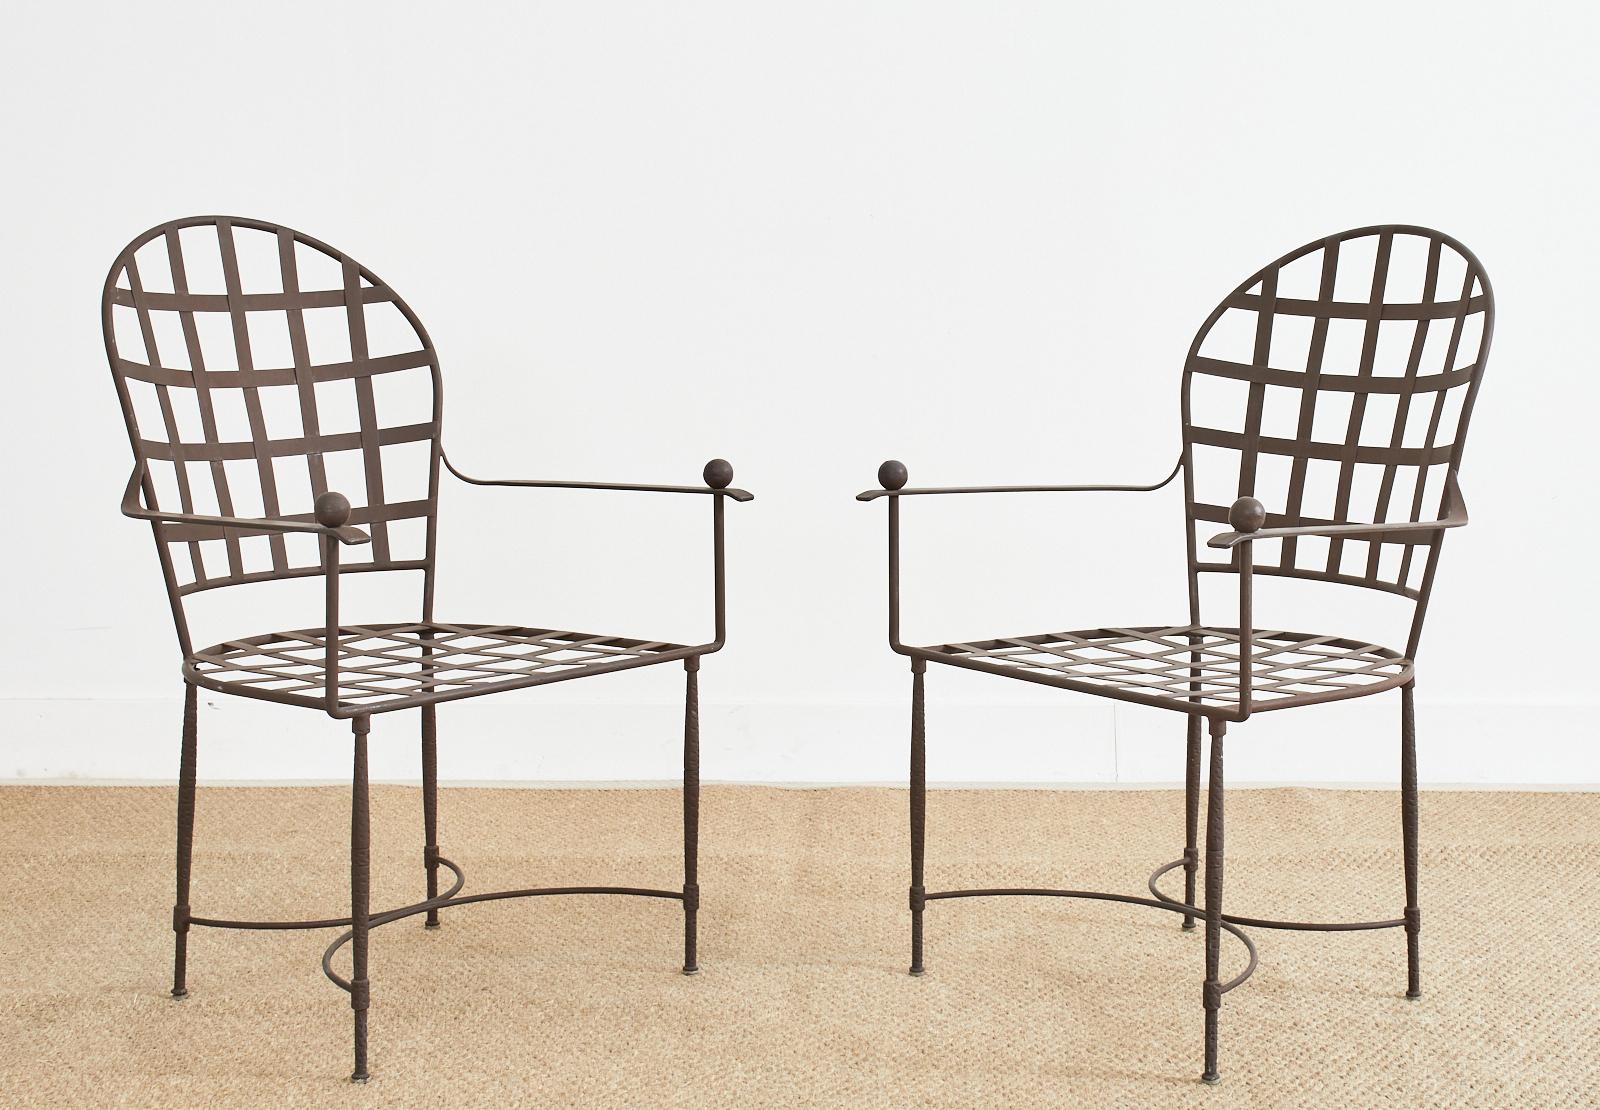 Fabric Set of Six Mario Papperzini for John Salterini Iron Garden Chairs